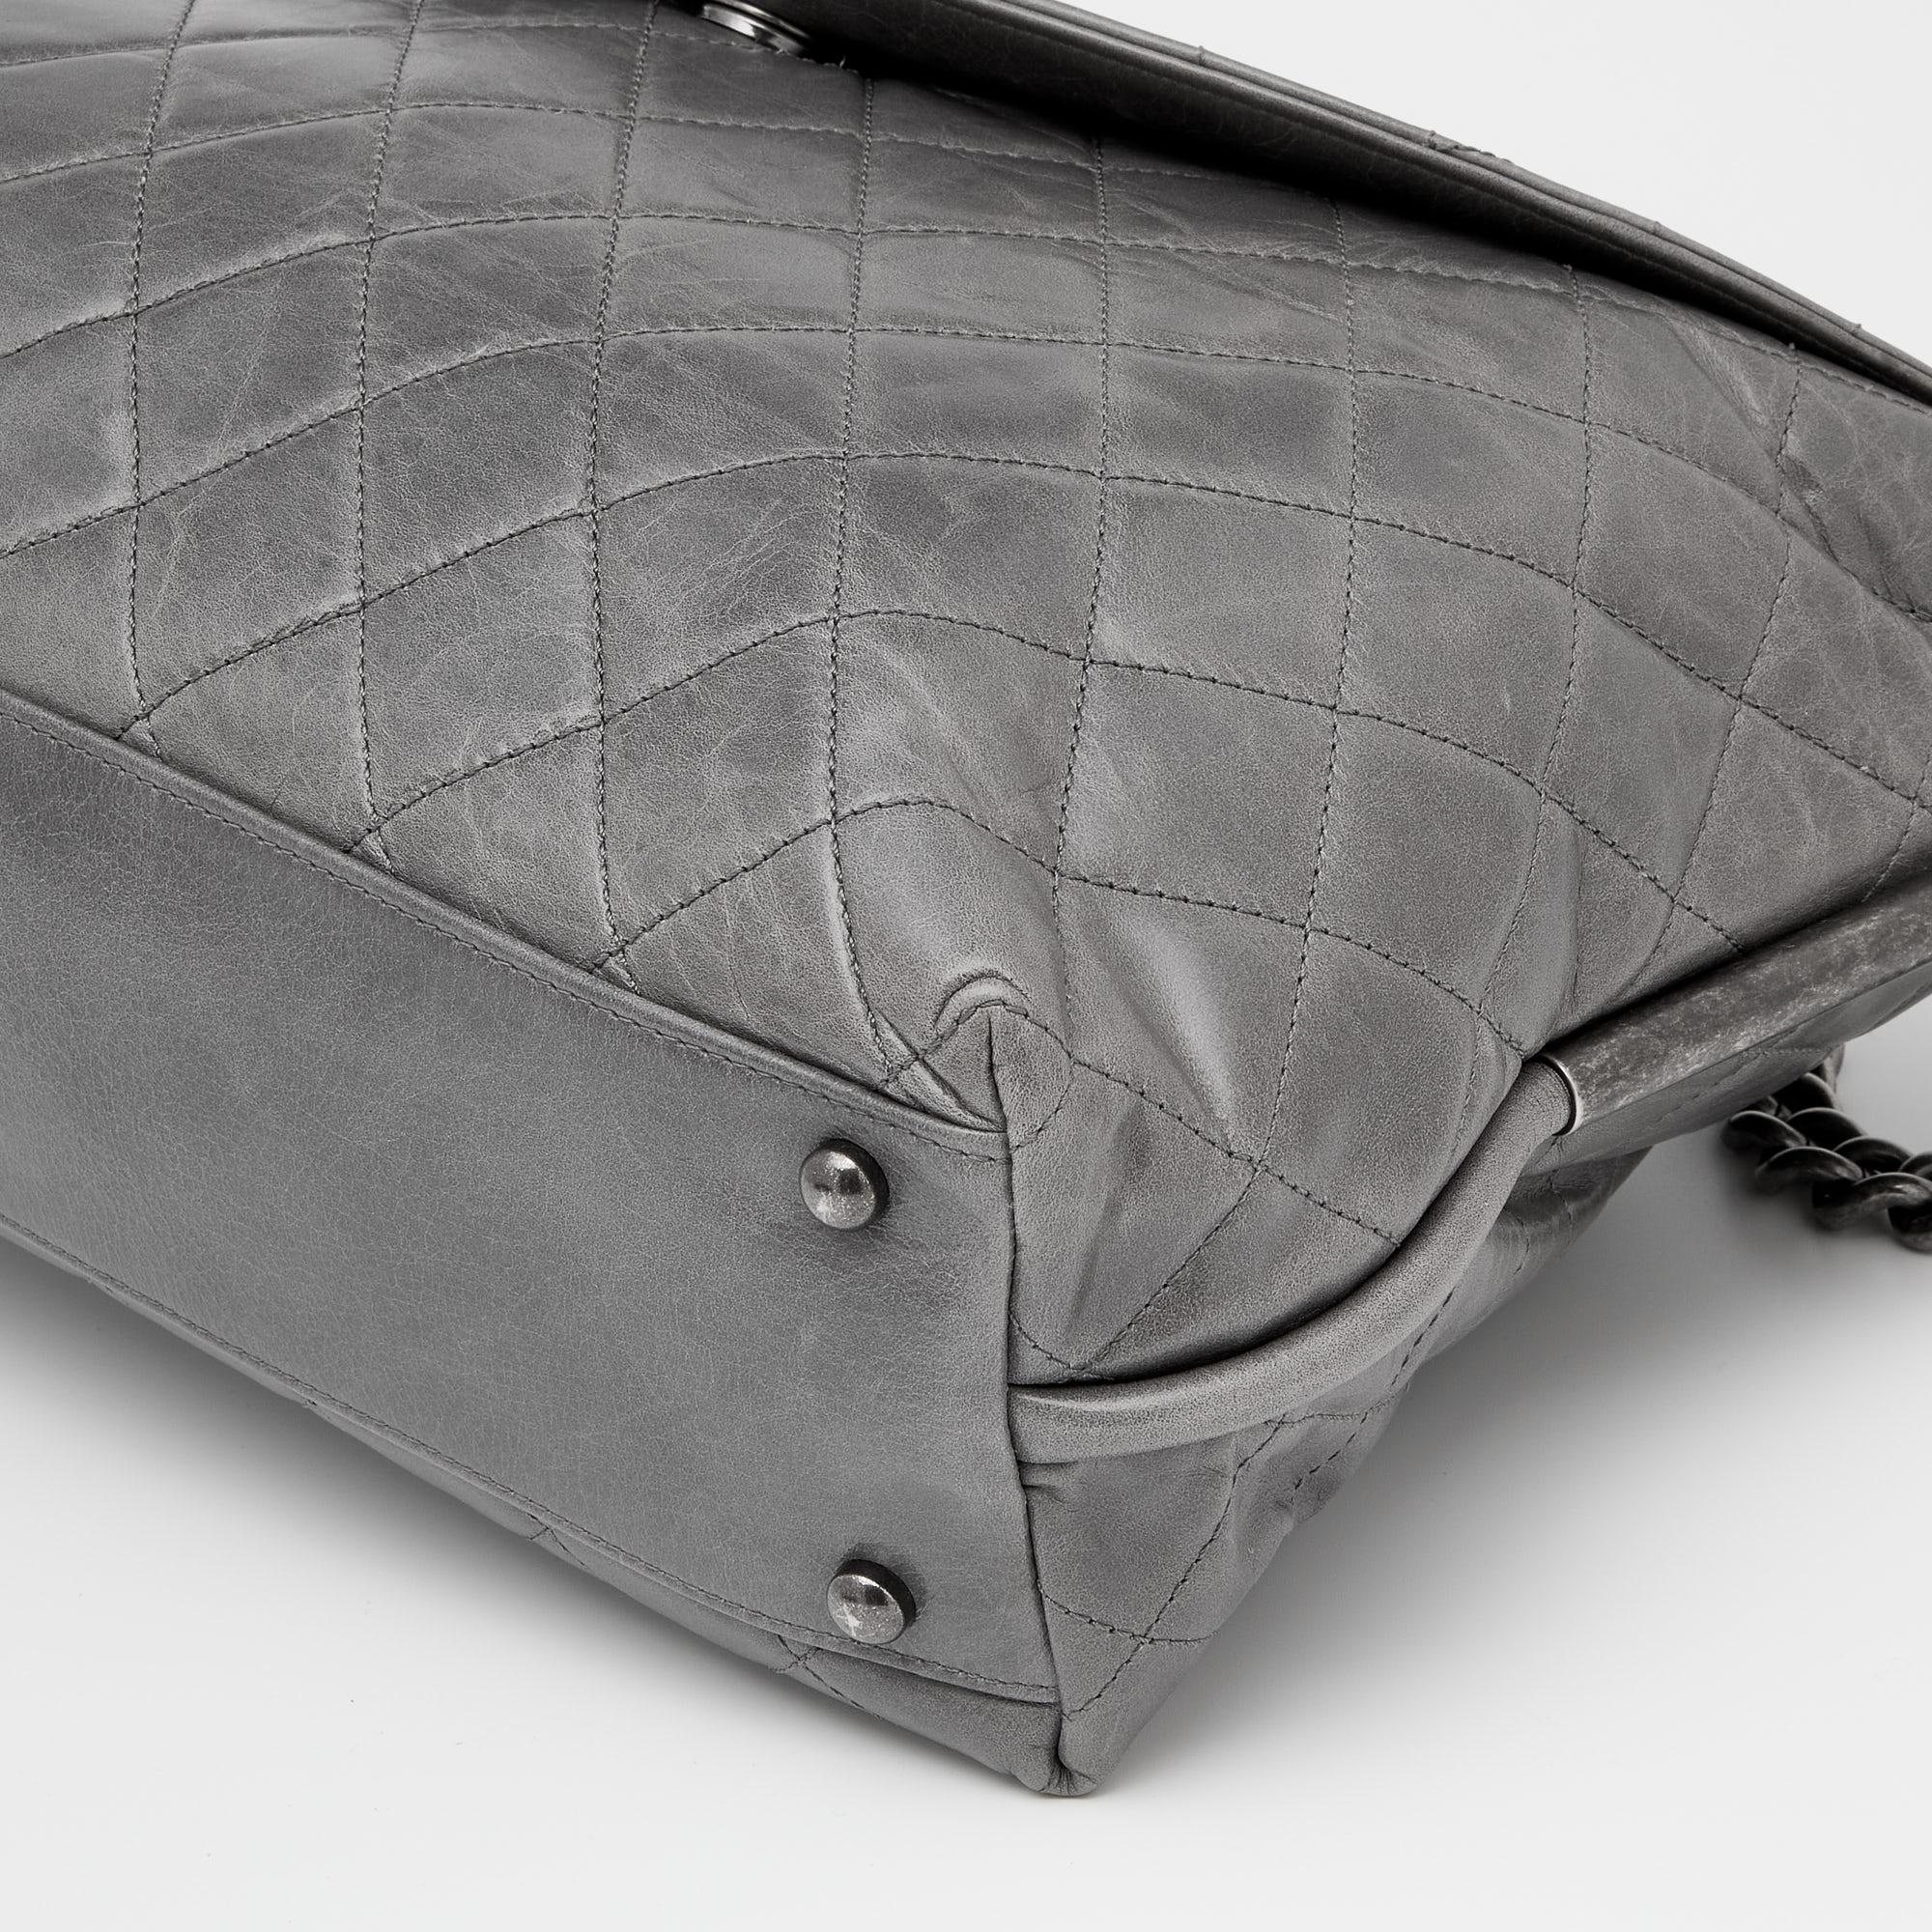 Chanel Grey Quilted Leather Shoulder Bag 1